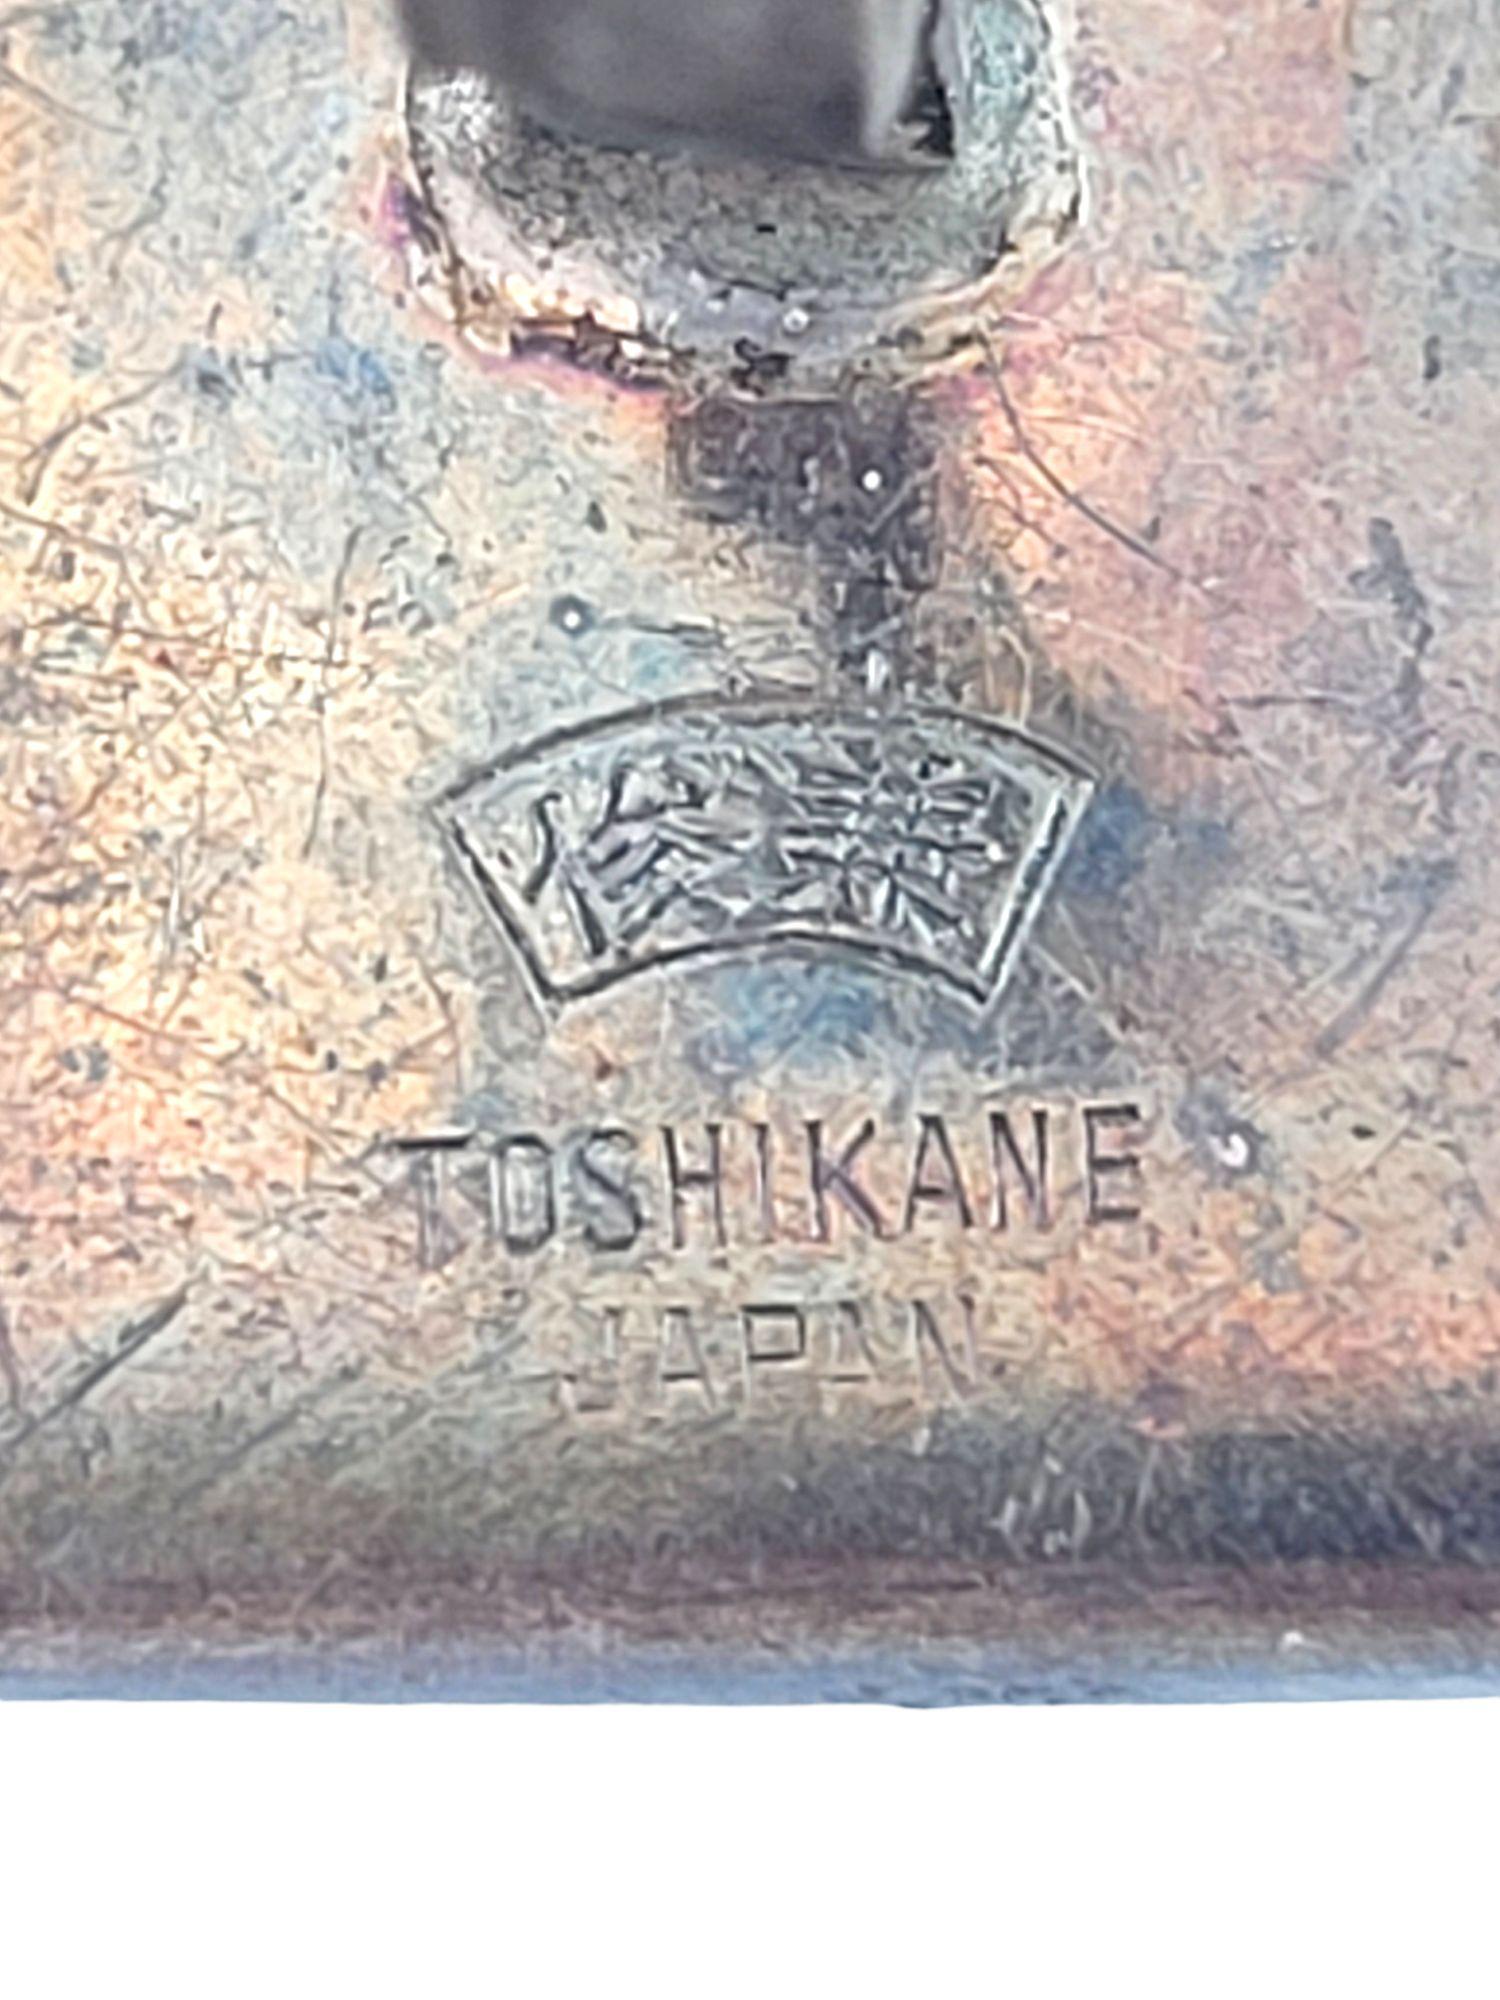 Toshikane Japan Silver Fortune God Jurajin Cufflinks Porcelain #14792 In Good Condition For Sale In Washington Depot, CT